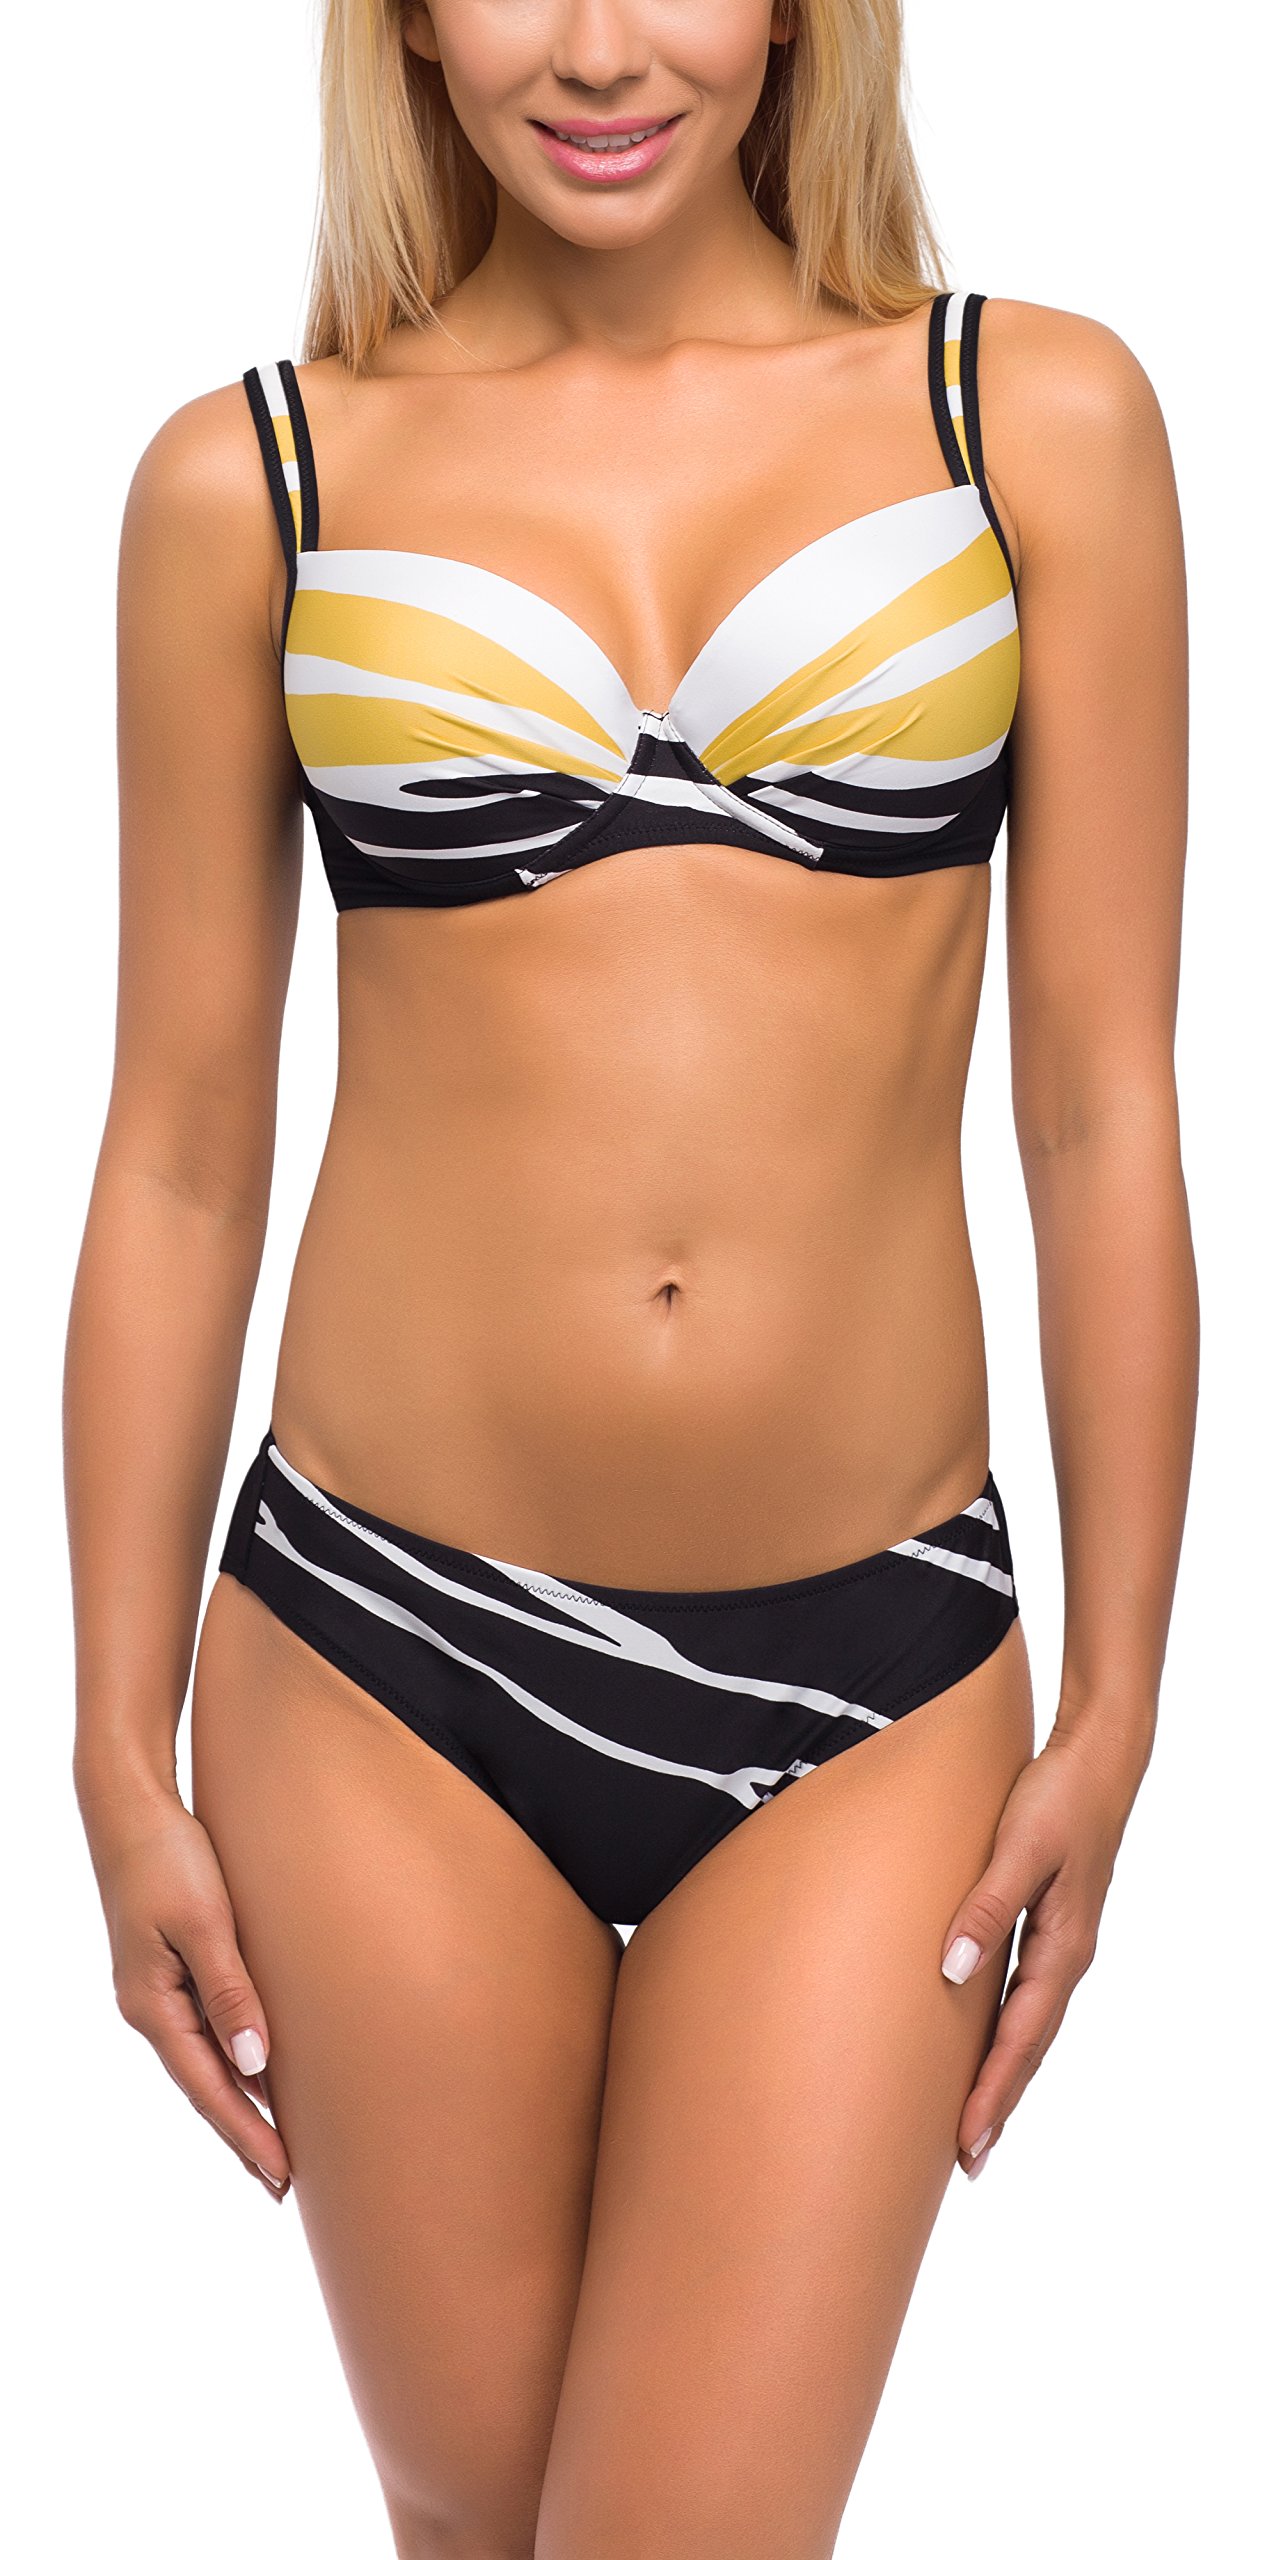 Feba Figurformender Damen Push Up Bikini D1N32L1V2RS4 (Schwarz/Weiß, Cup 75 G/Unterteil 38)